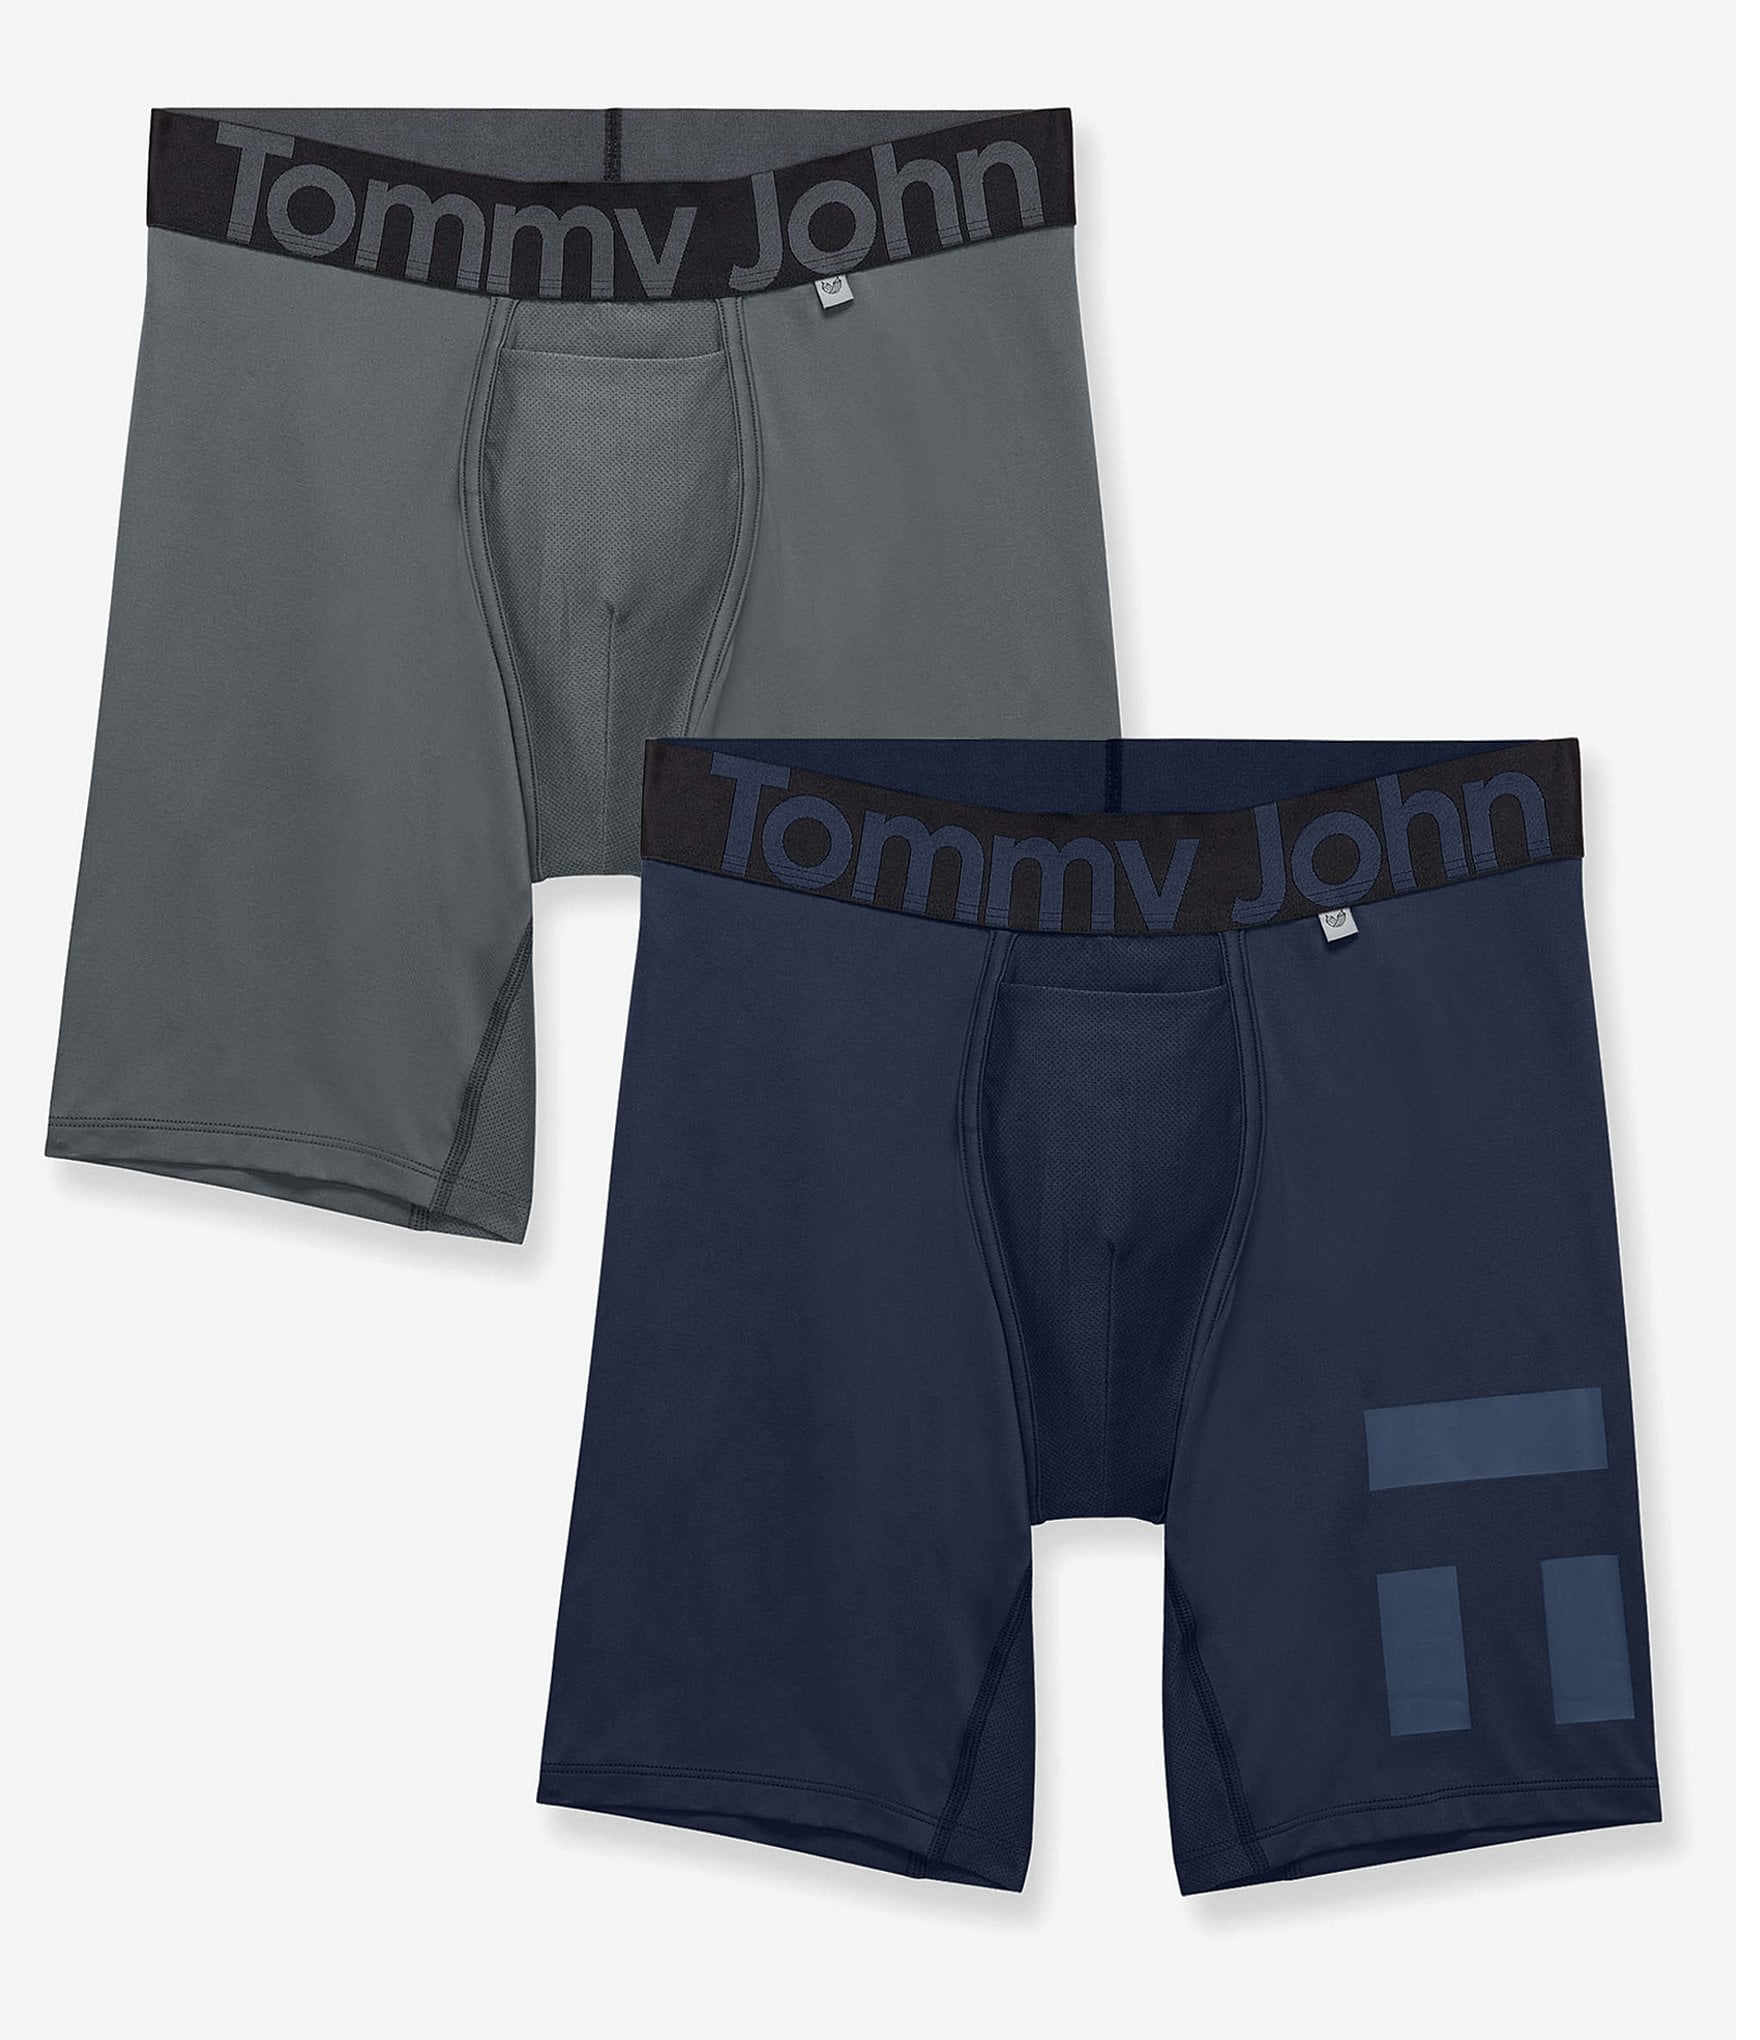 Buy Tommy John Men's Cool Cotton Boxer Briefs - 3 Pack - No Ride